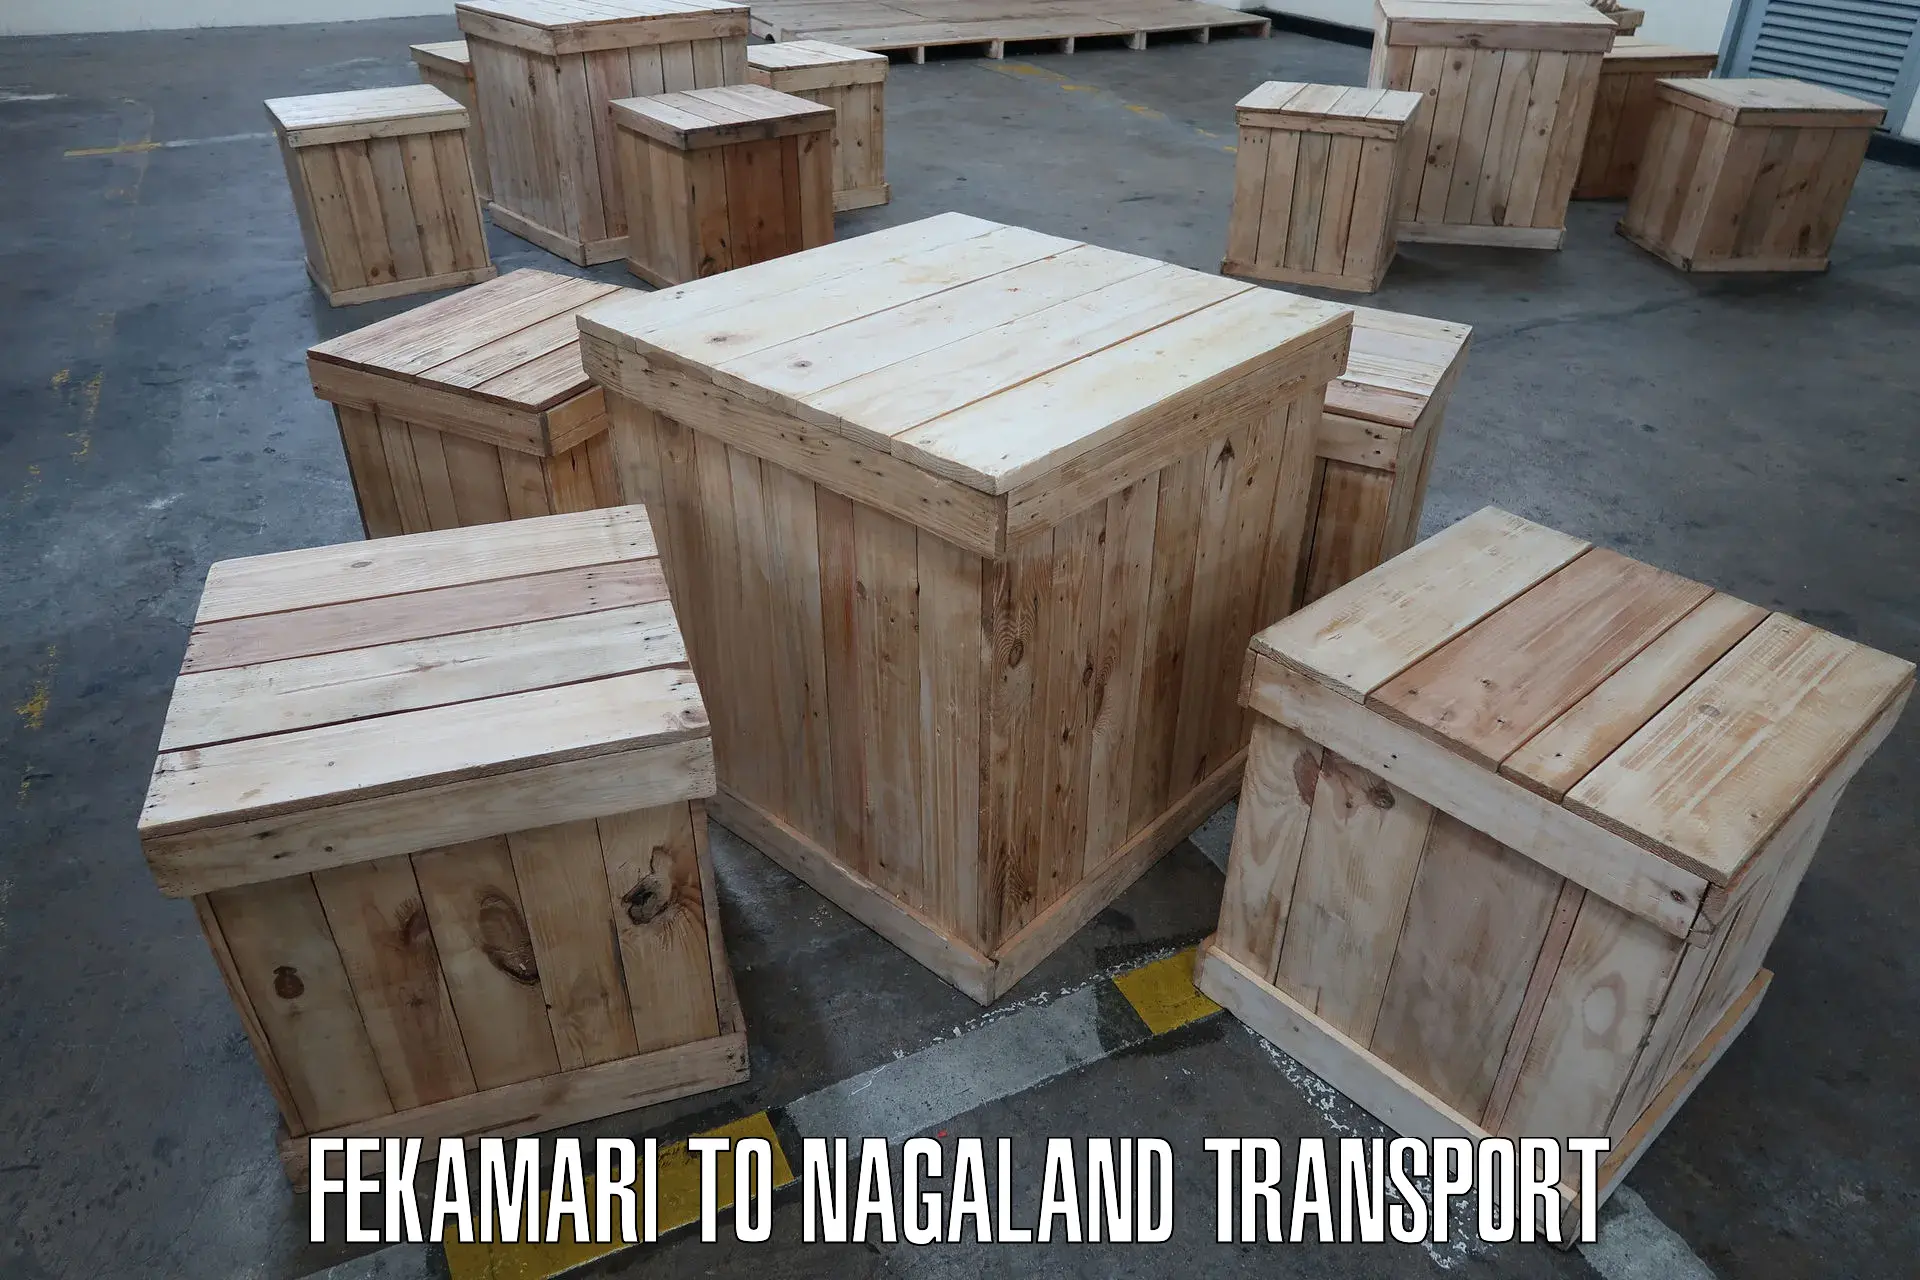 Lorry transport service Fekamari to Nagaland